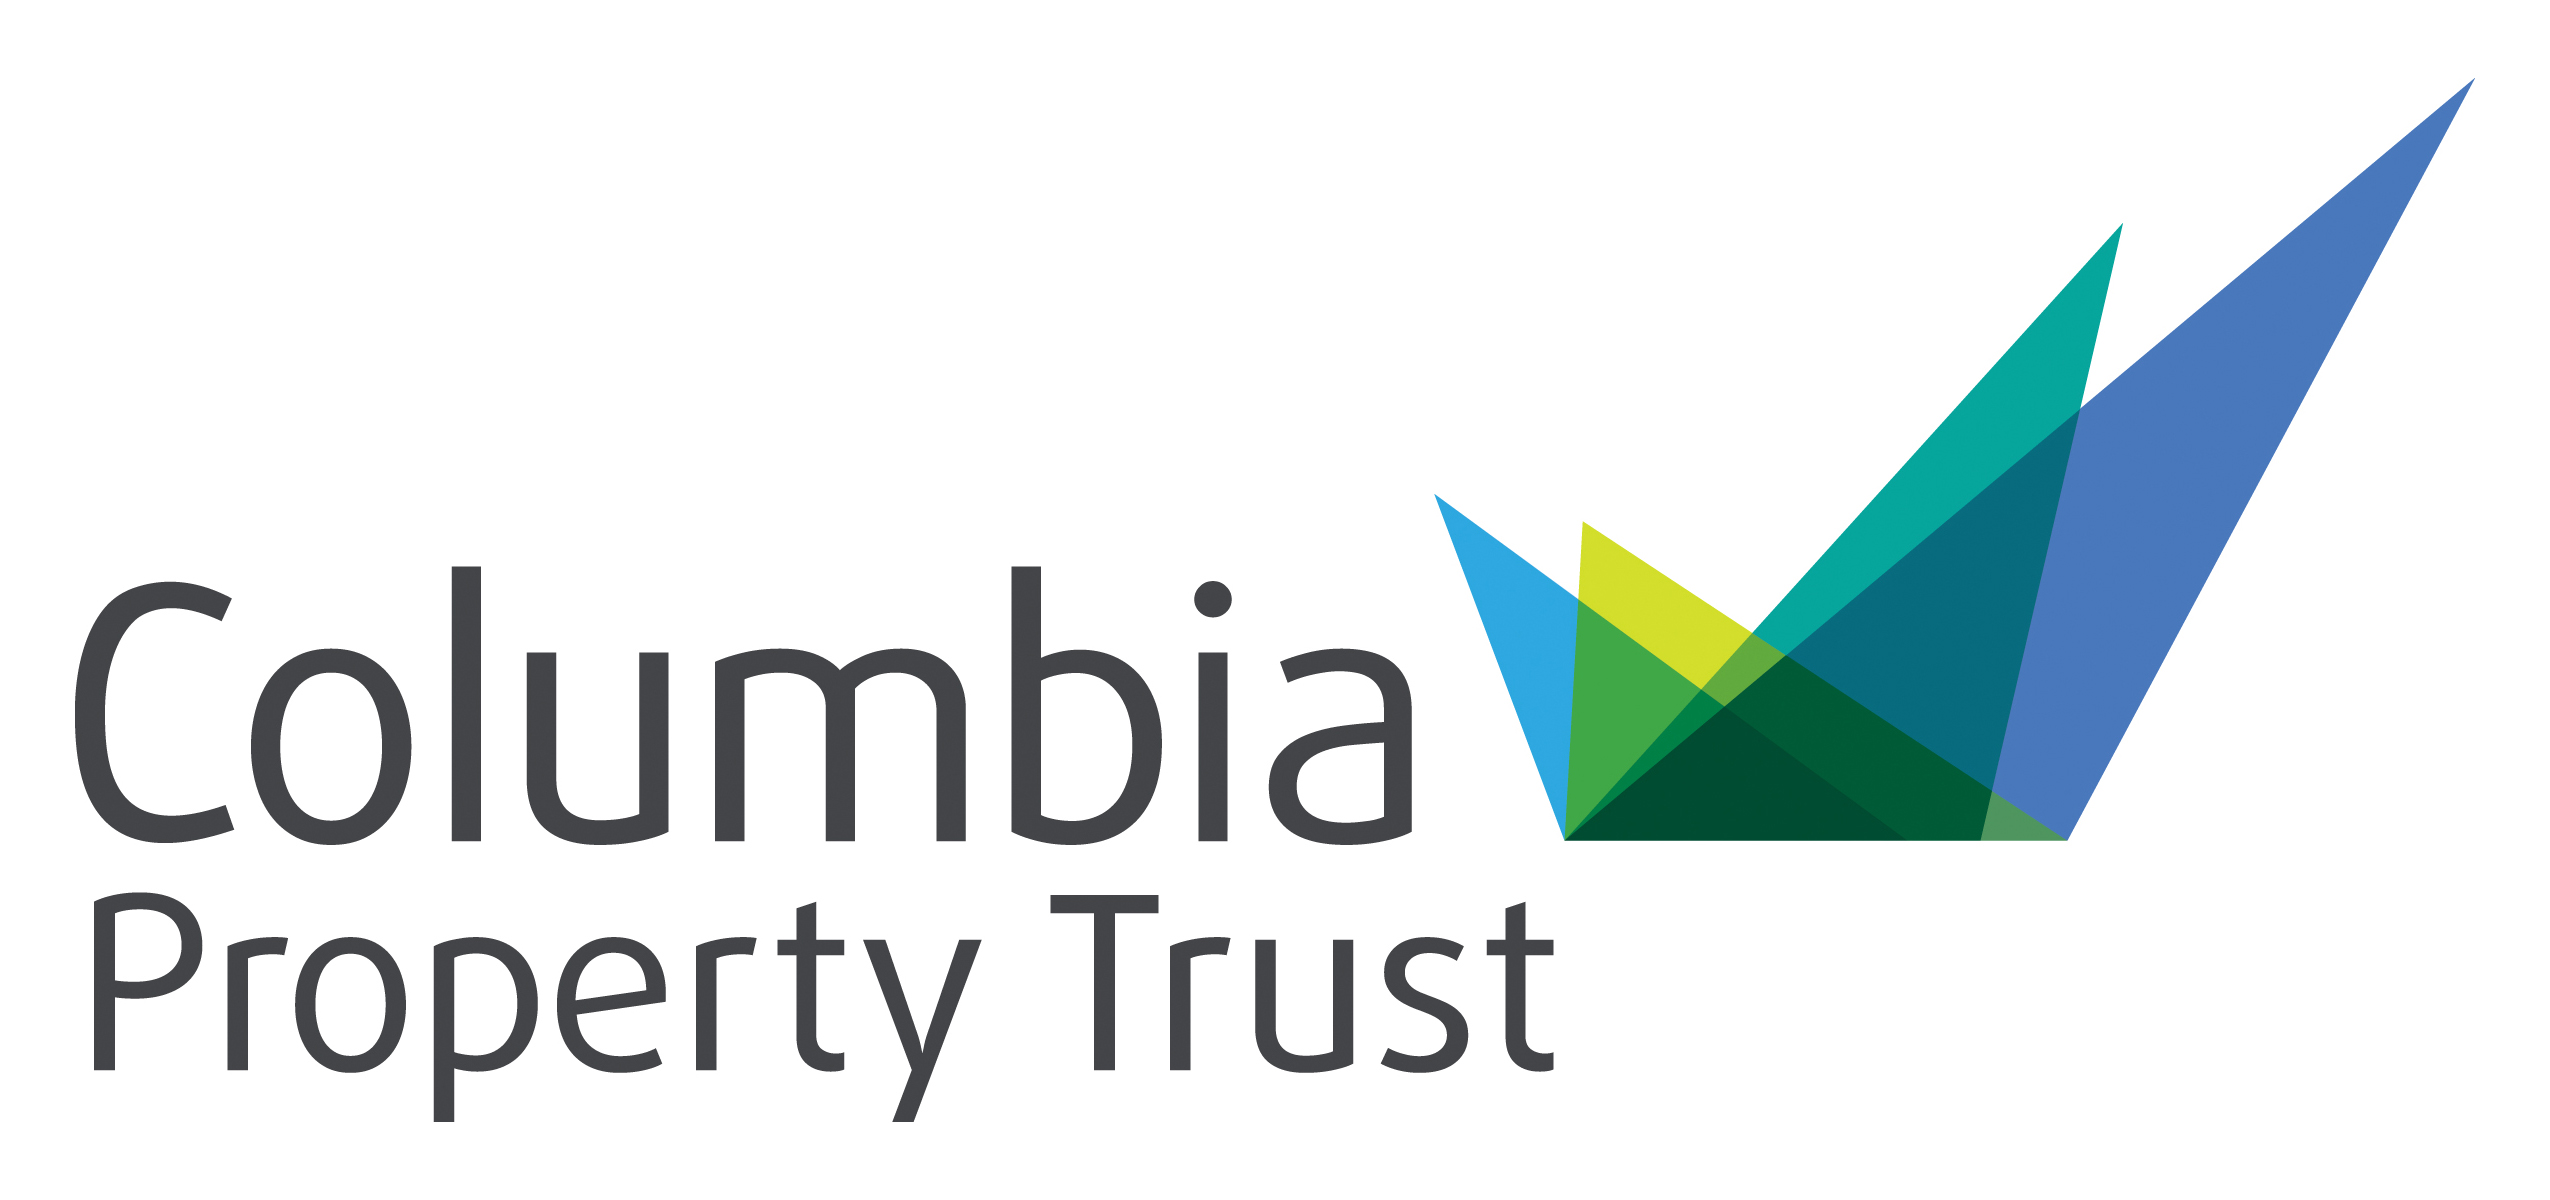 Columbia Property Trust logo